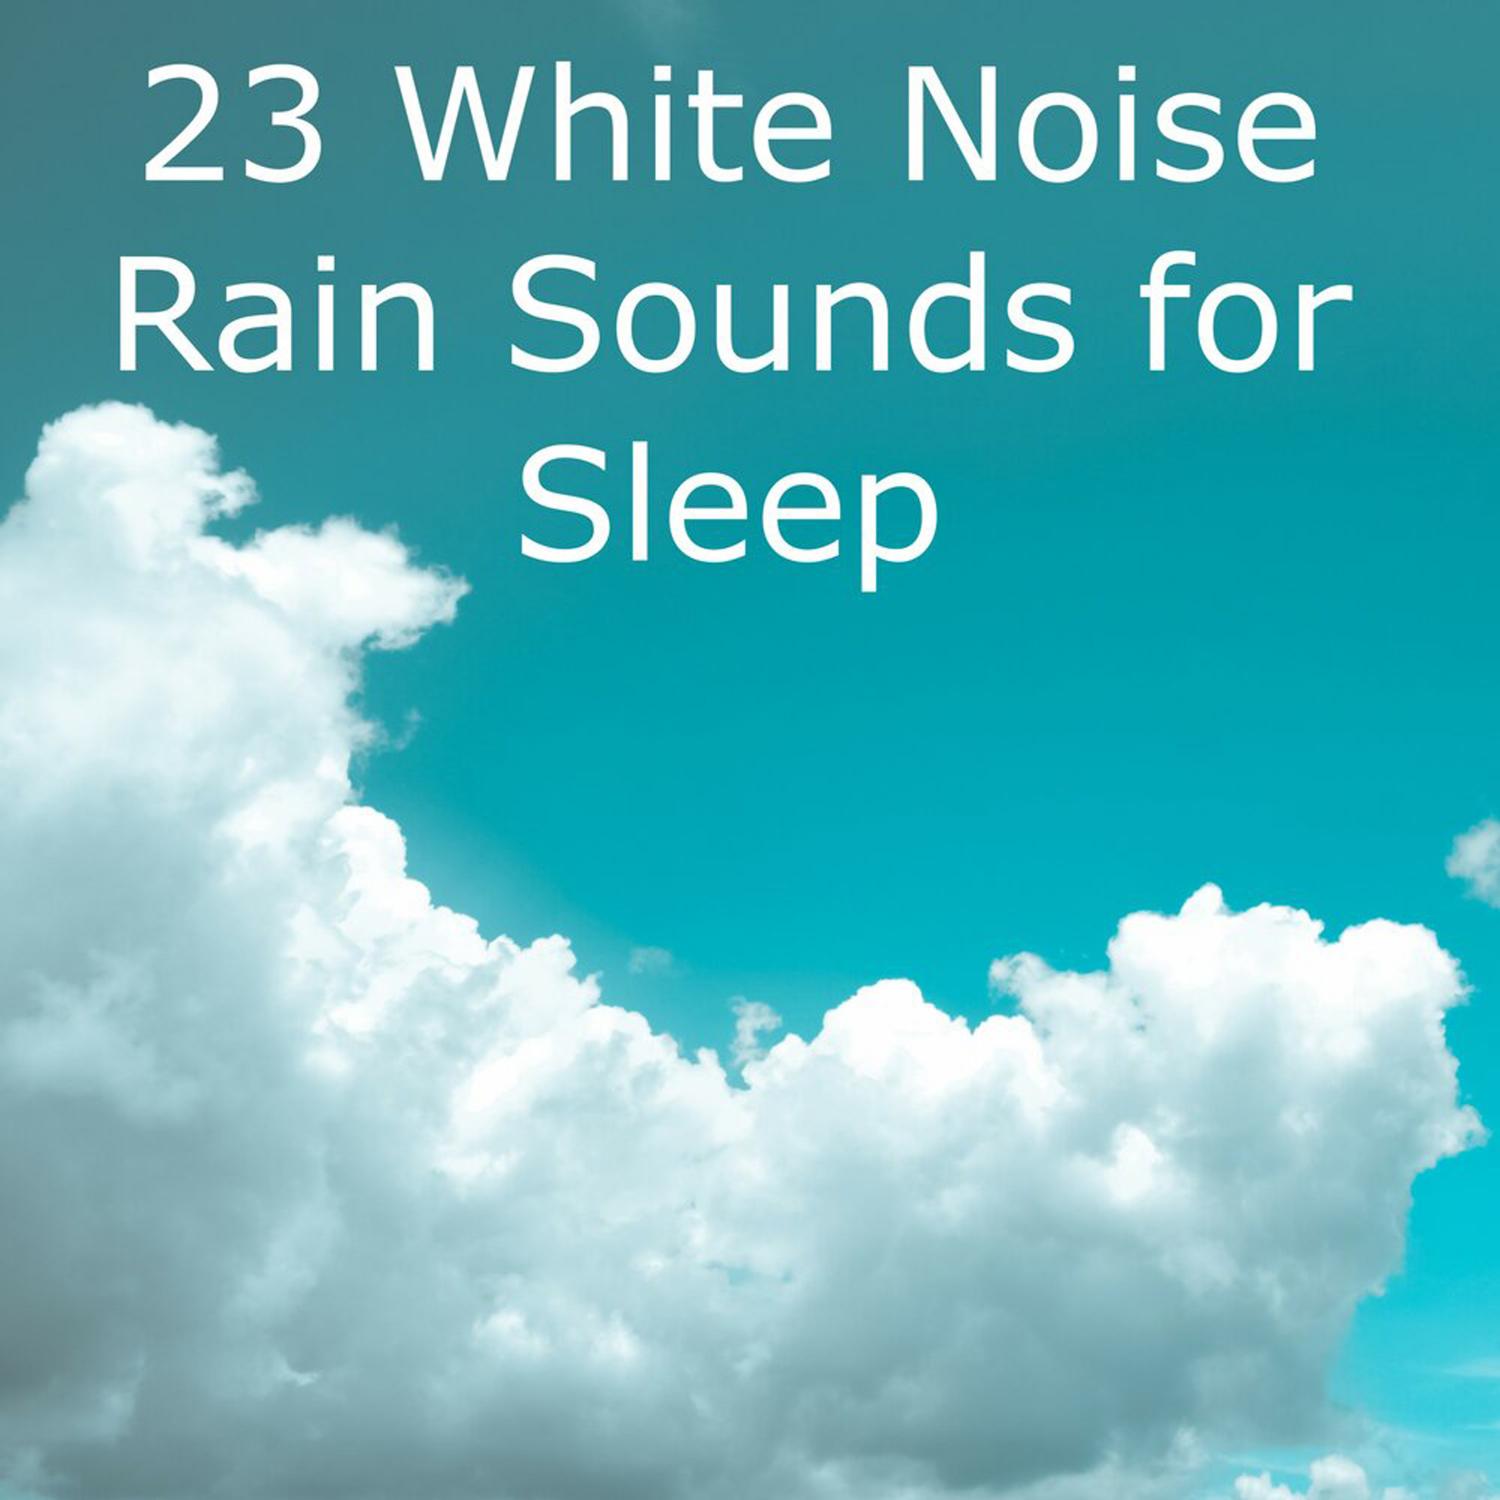 23 White Noise Sounds for Sleeping - Rain Sounds White Noise